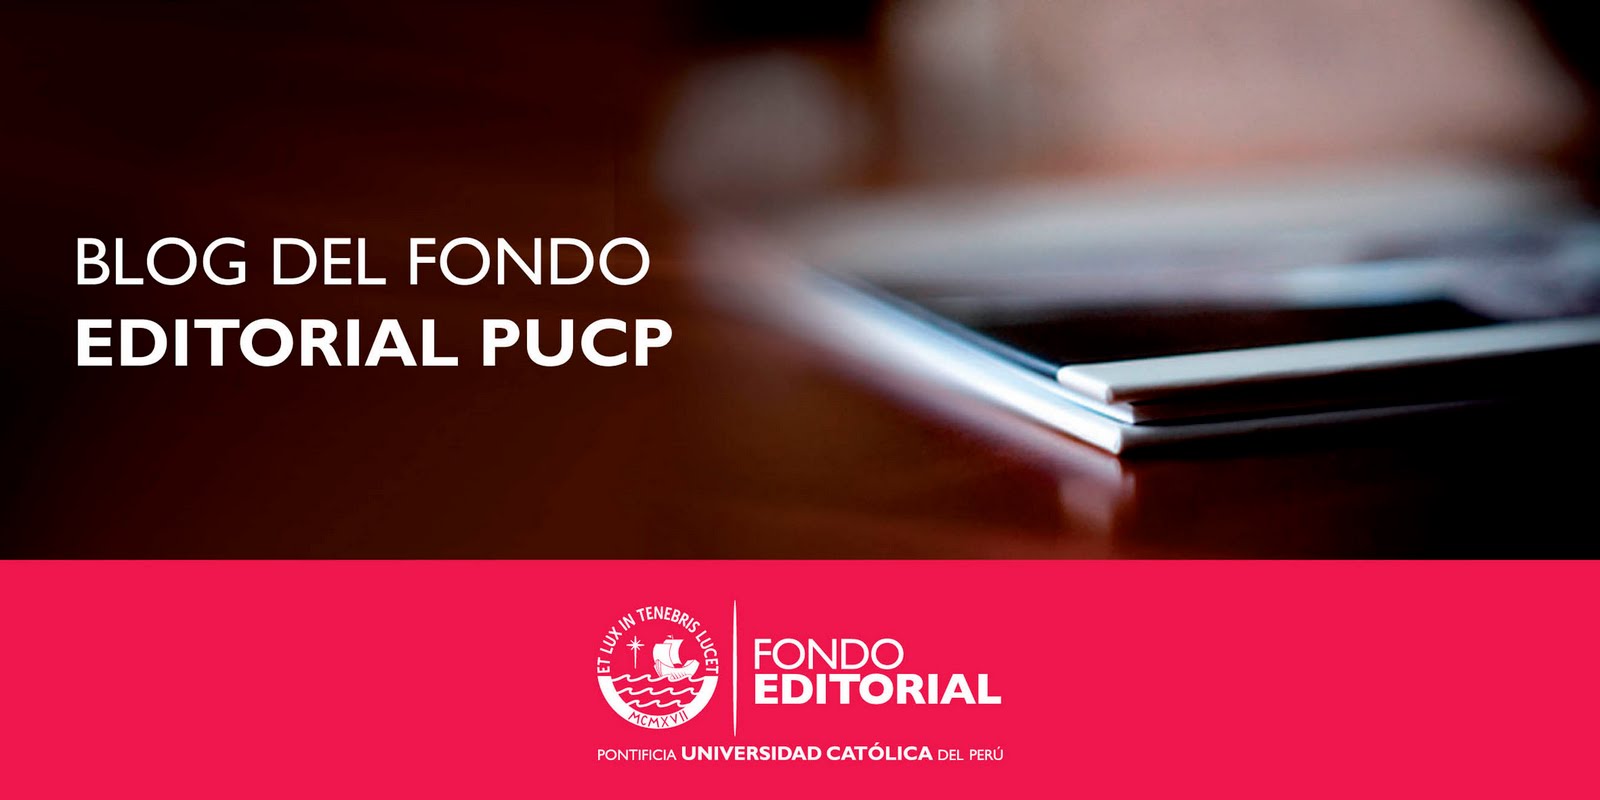 Blog del Fondo Editorial PUCP